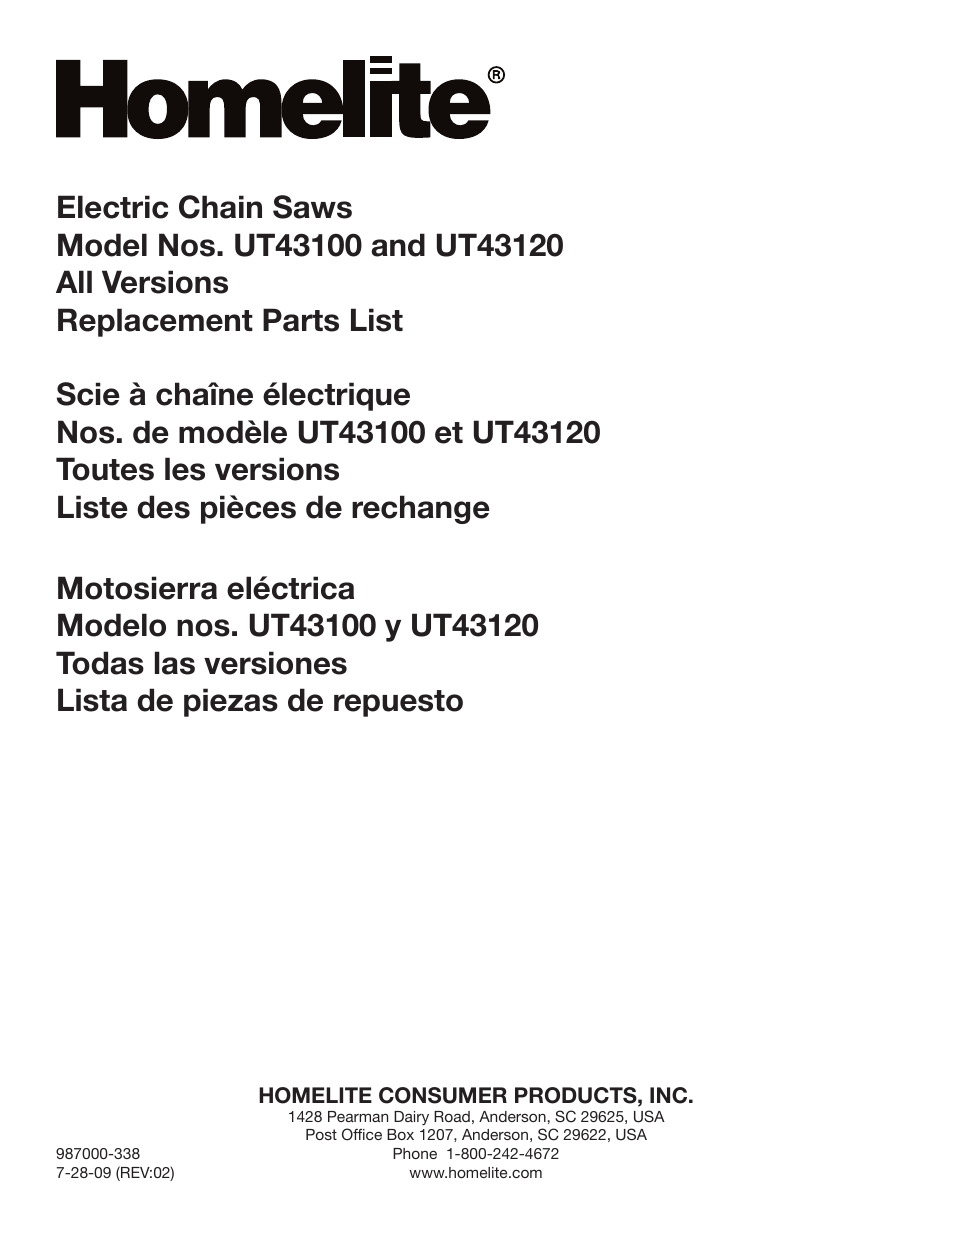 Homelite UT43120 User Manual | 4 pages